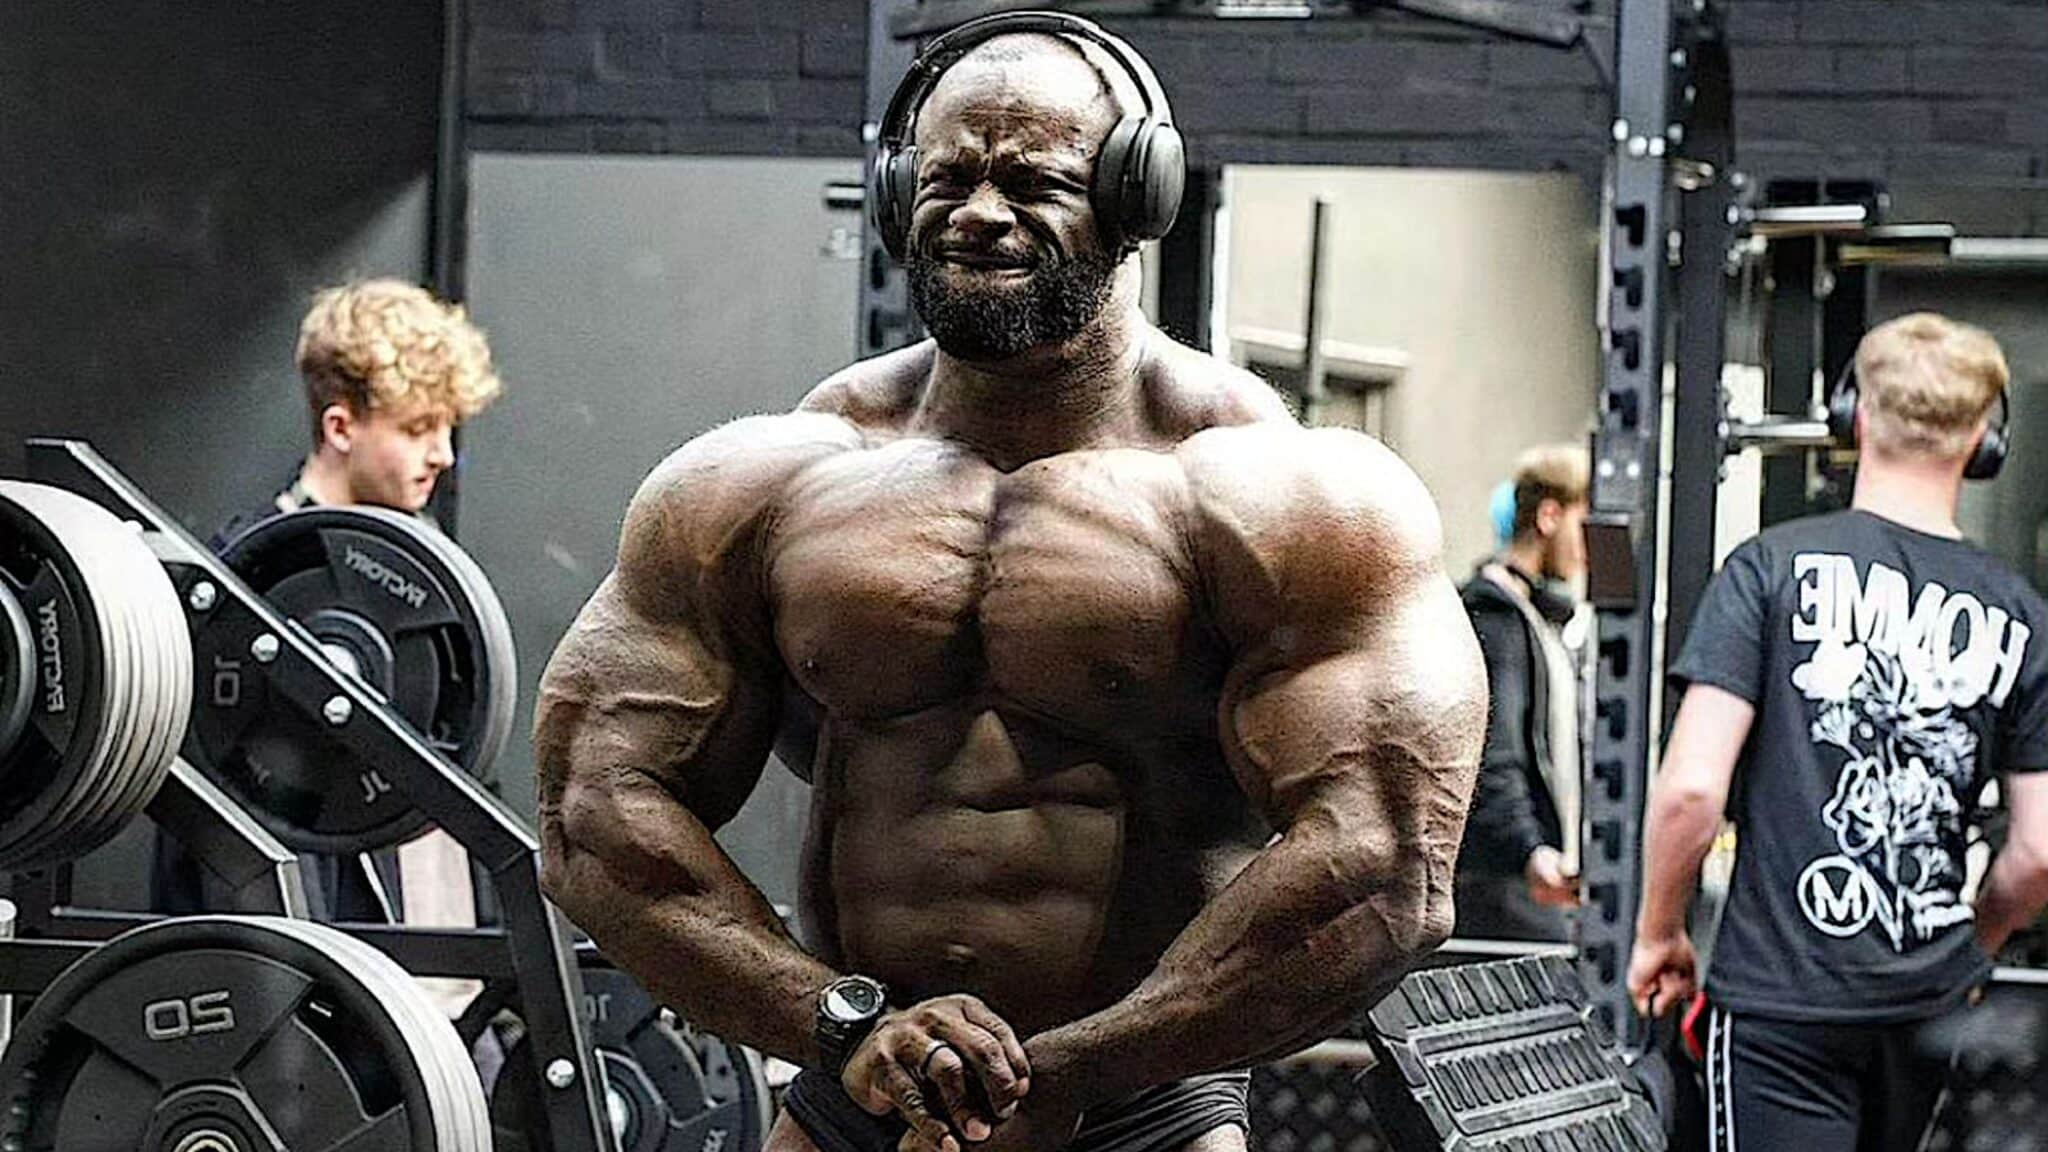 Professional bodybuilder Samson Dauda, shirtless in a weight room, posing with headphones on.